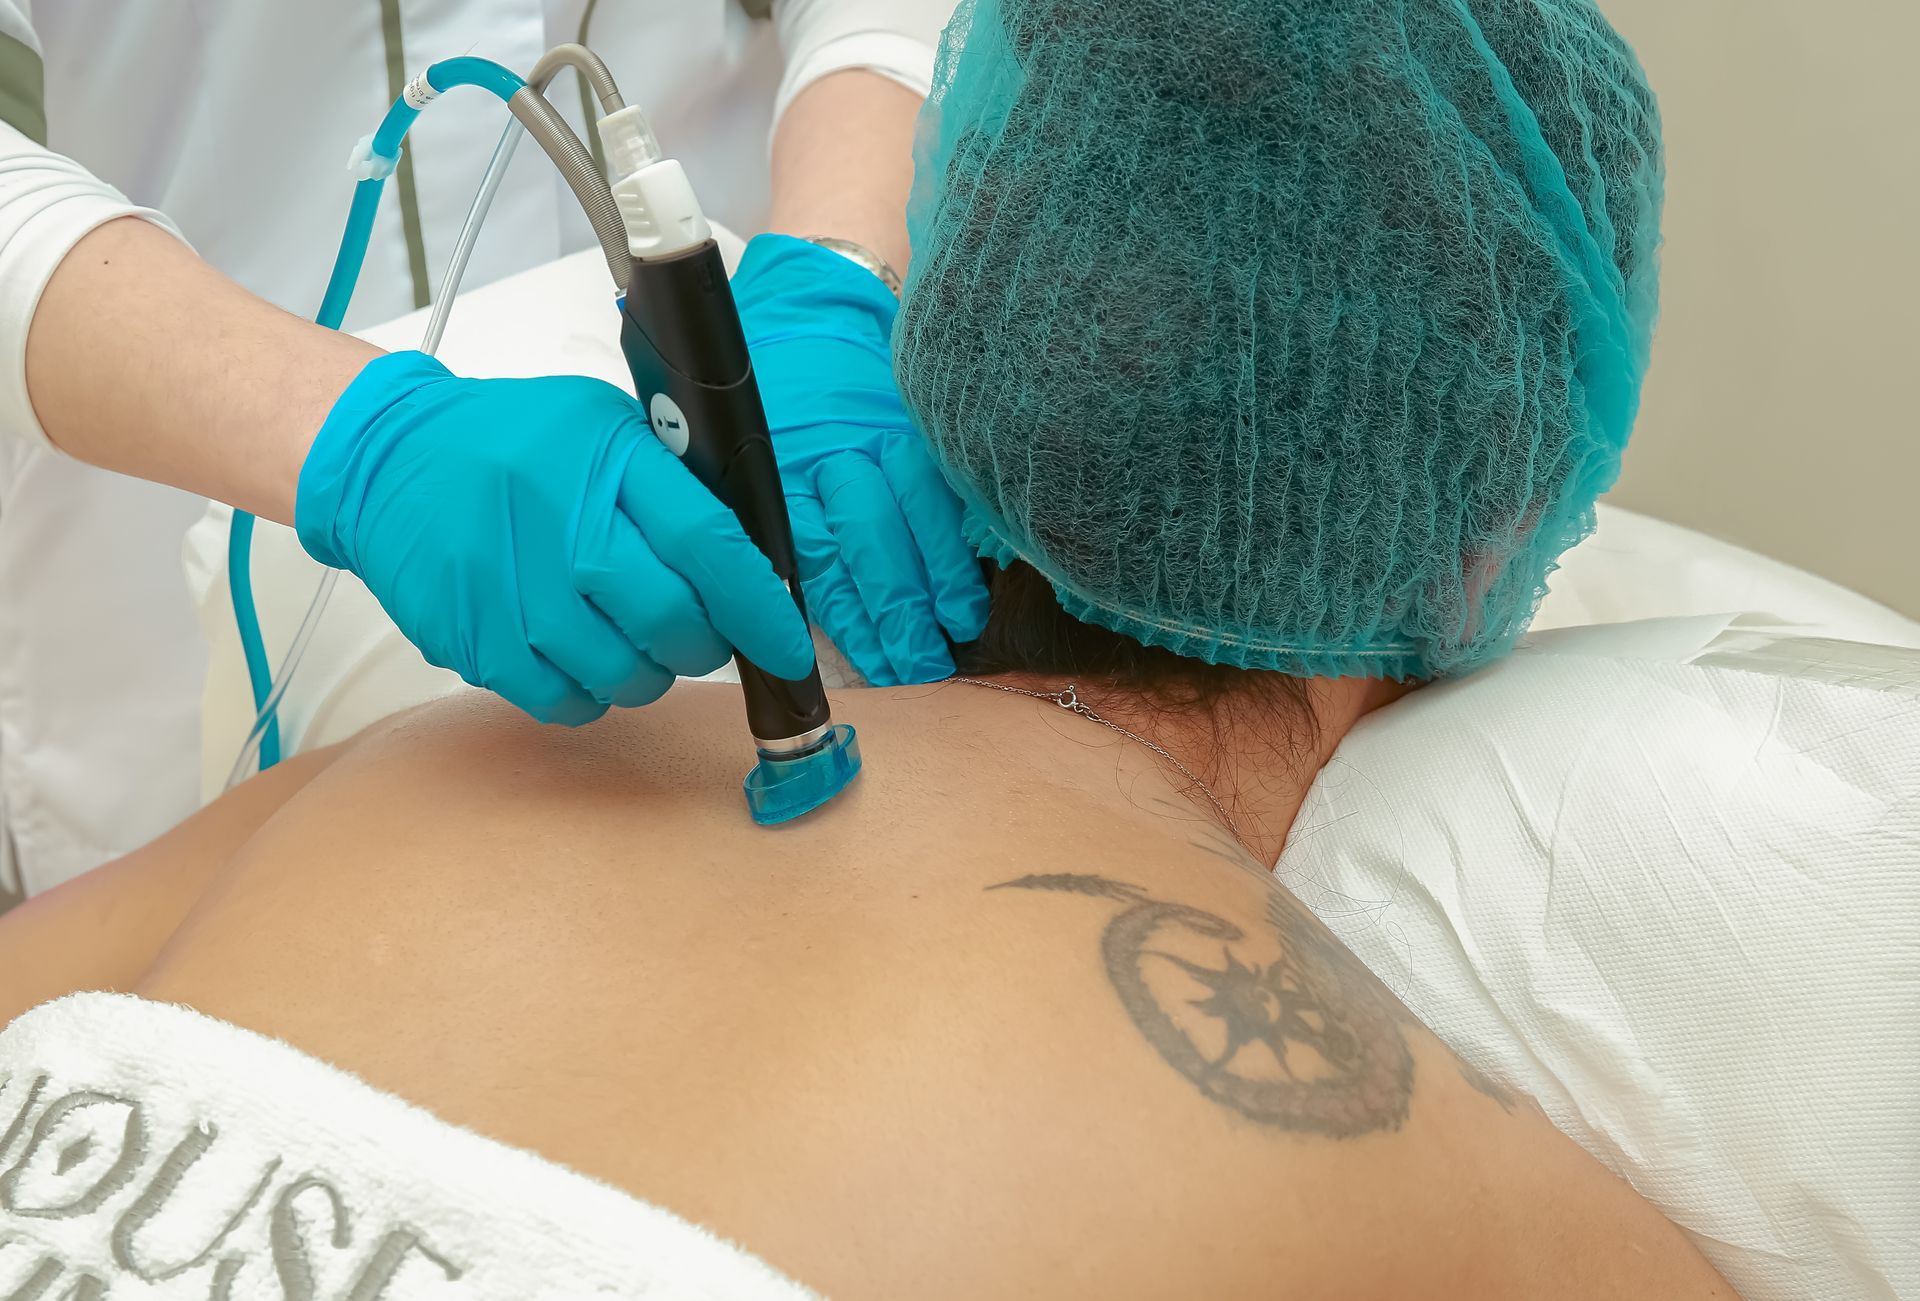 Laser operator applying laser on patient's back